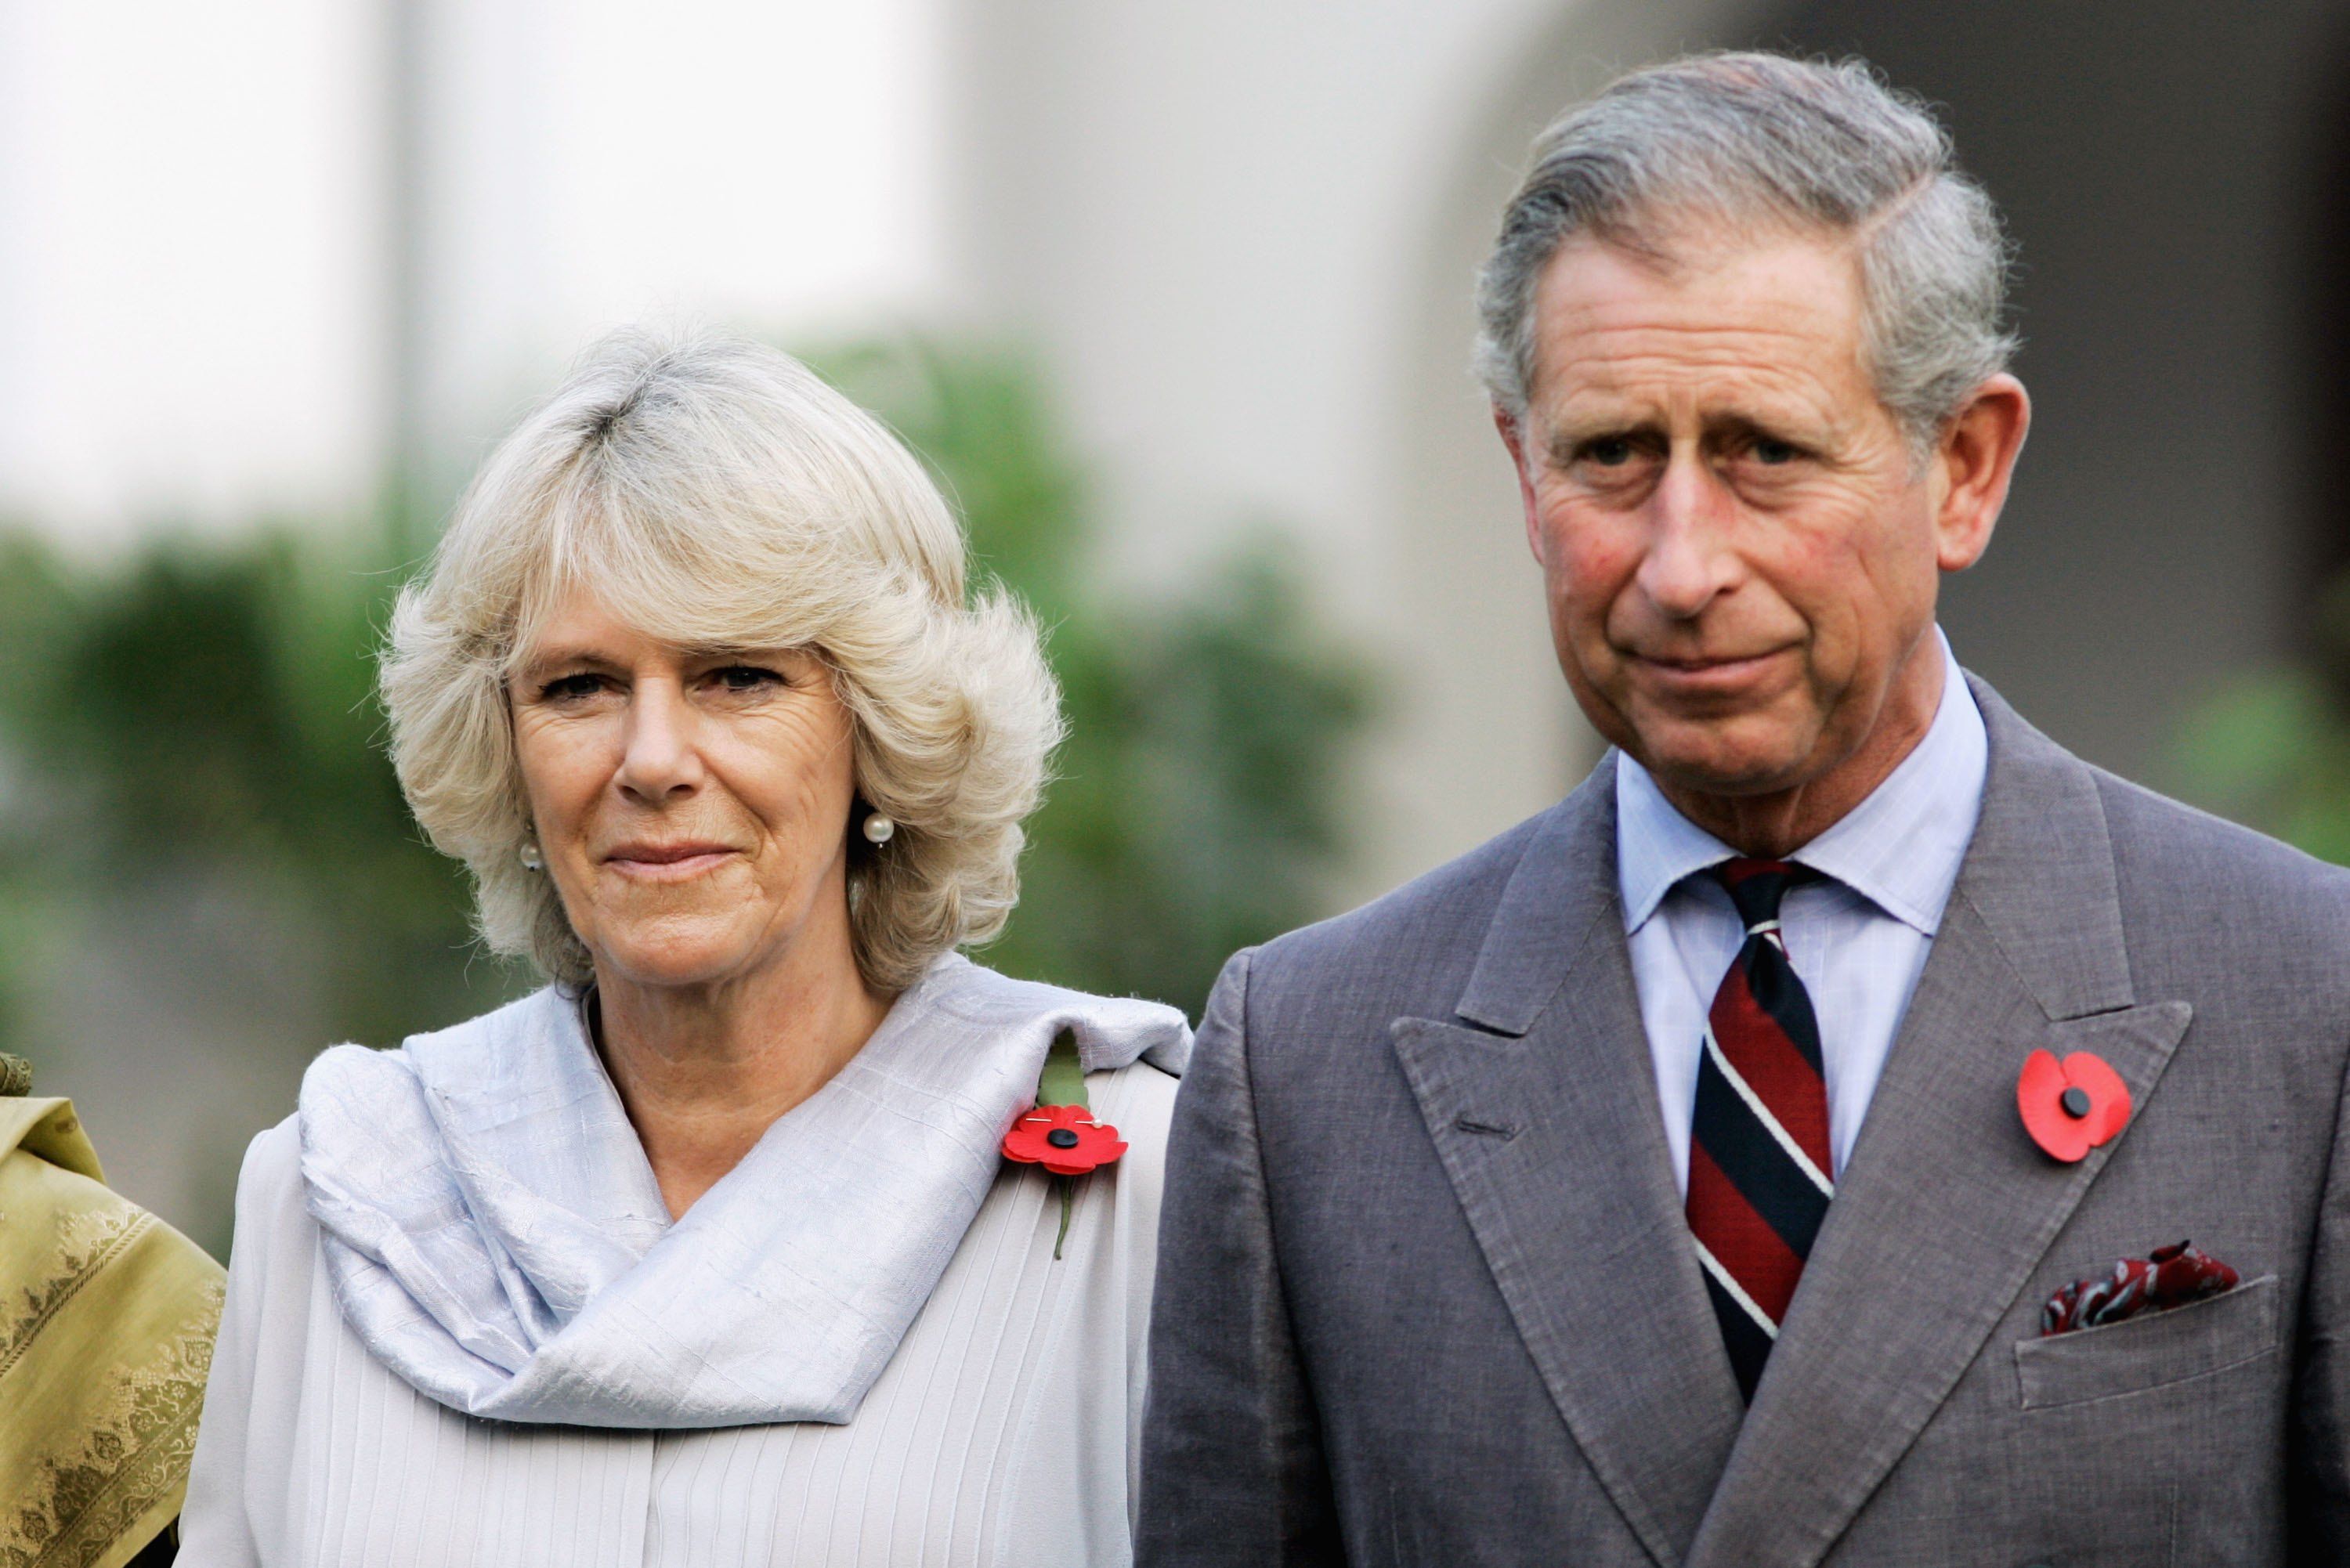 Prince Charles becomes King of United Kingdom￼ - Peoples Gazette